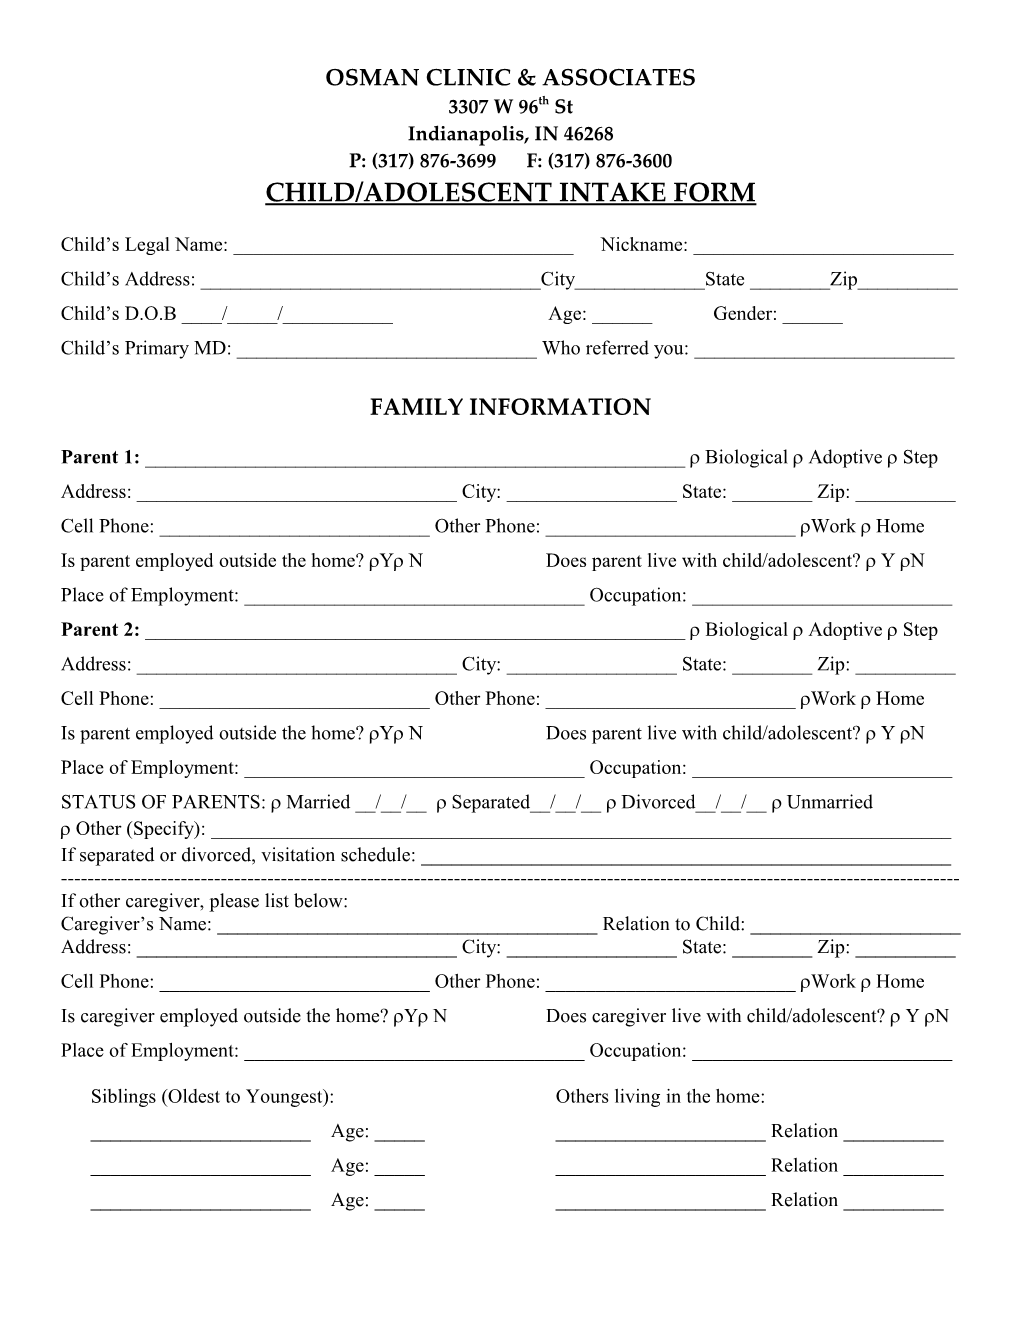 Child/Adolescent Intake Form